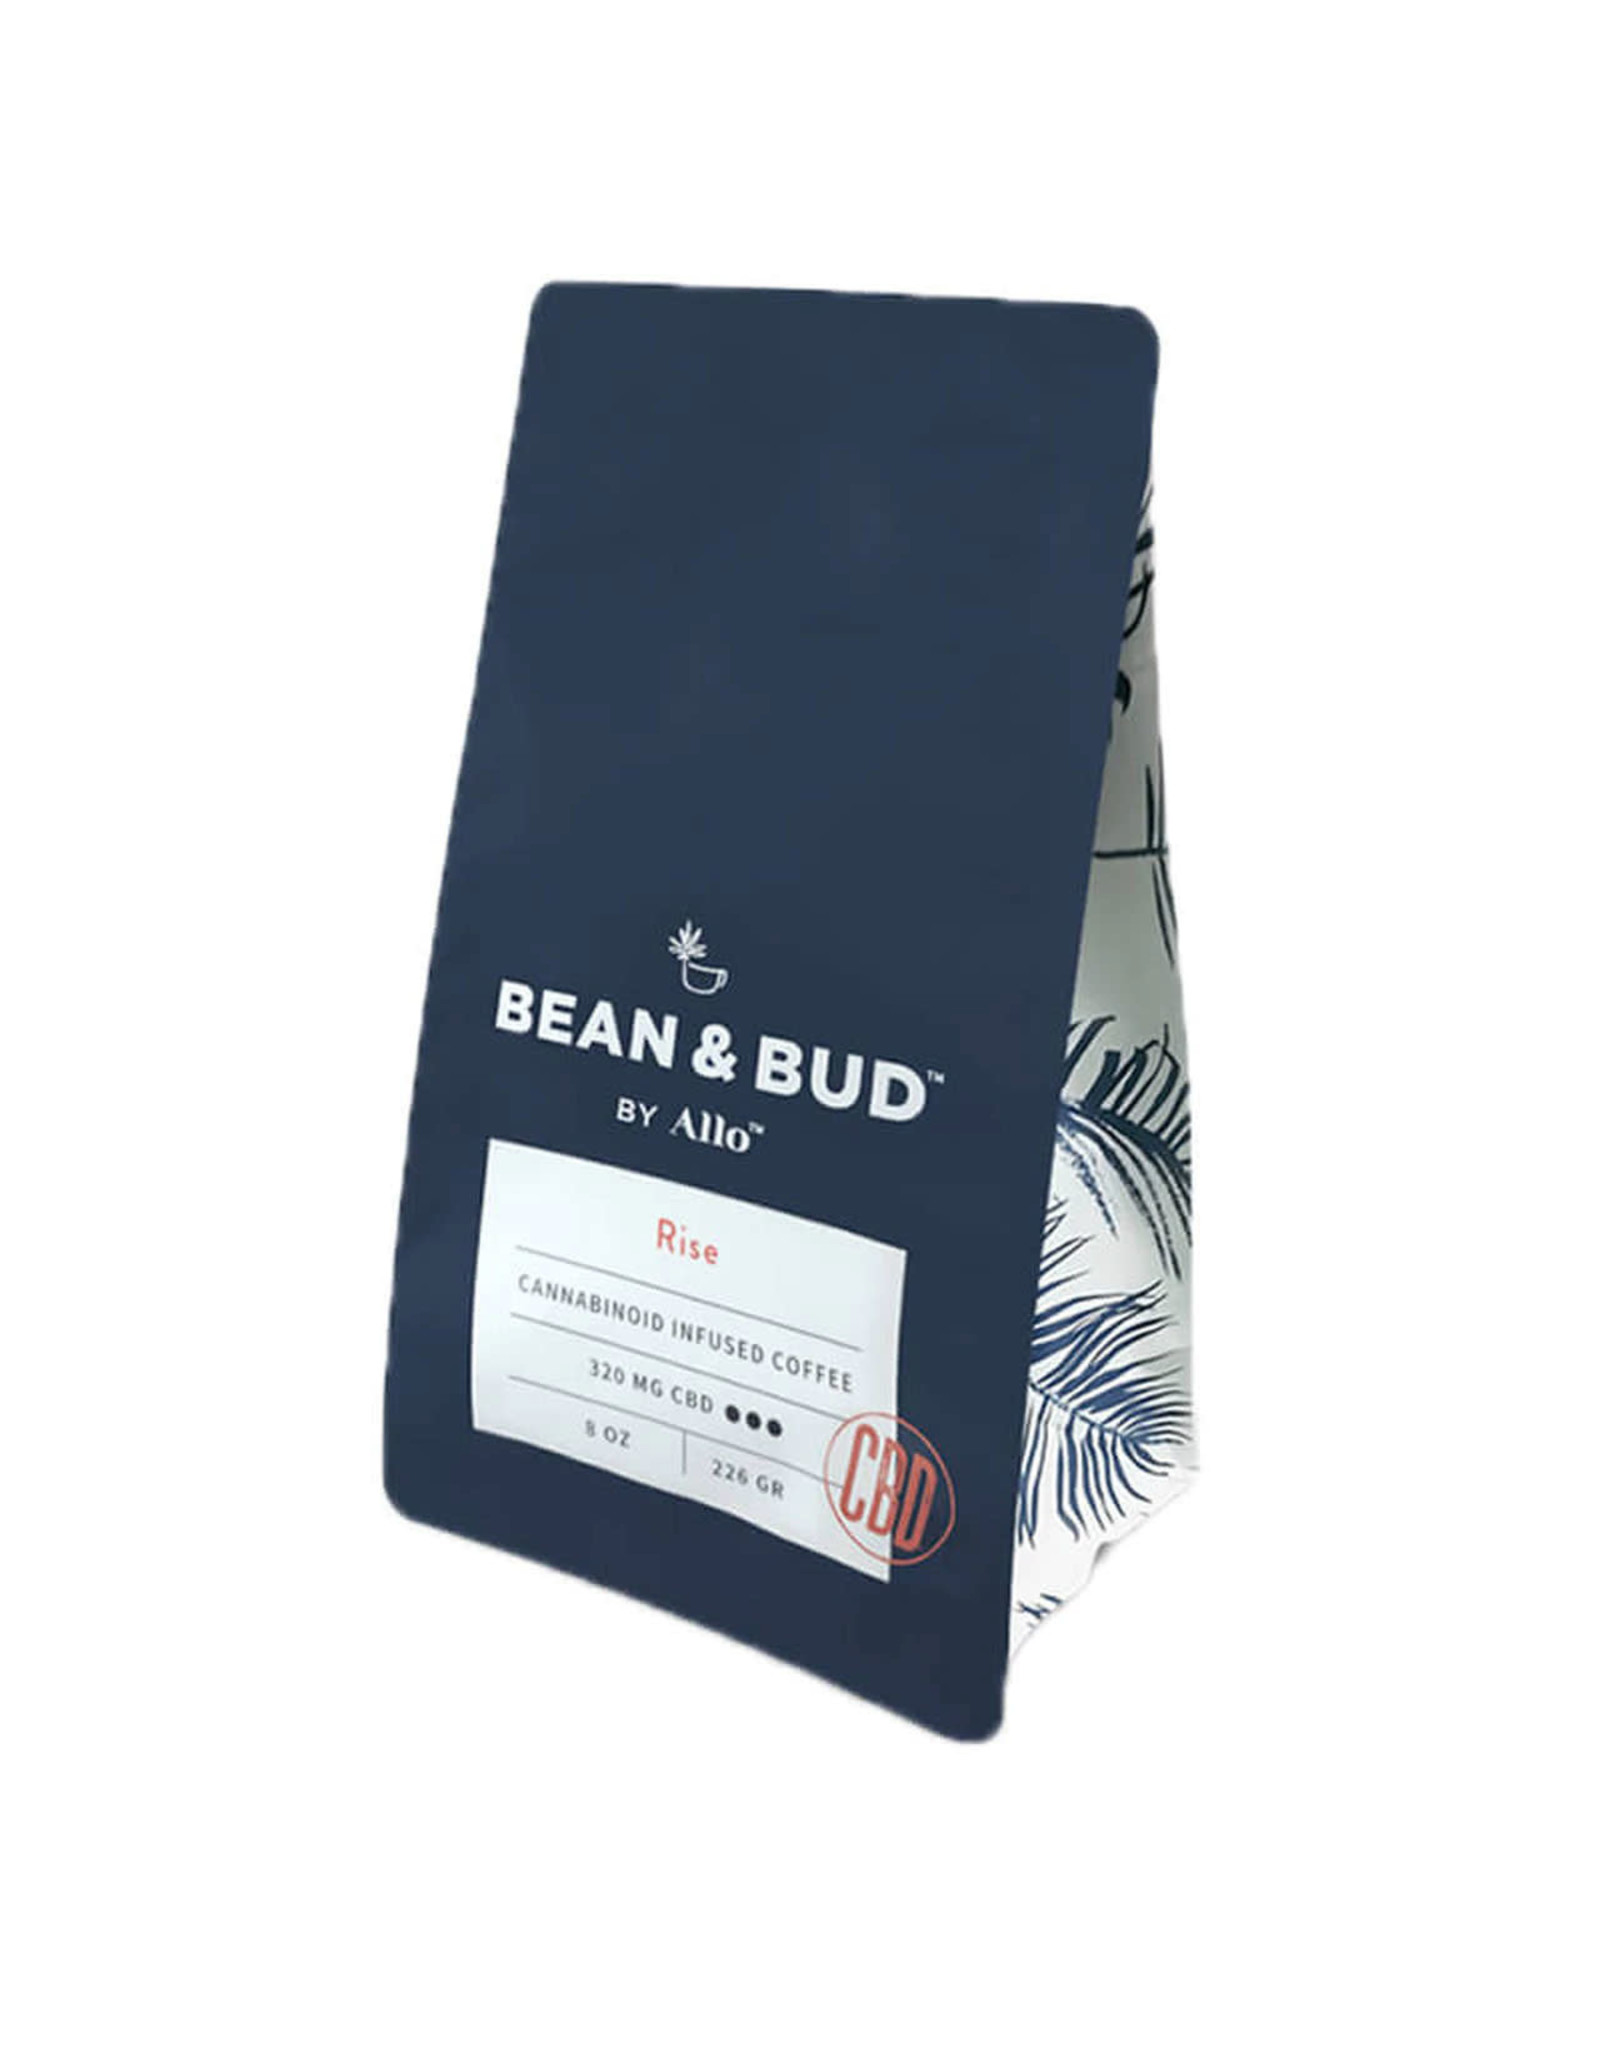 Bean and Bud Bean and Bud Coffee 320mg CBD  8oz